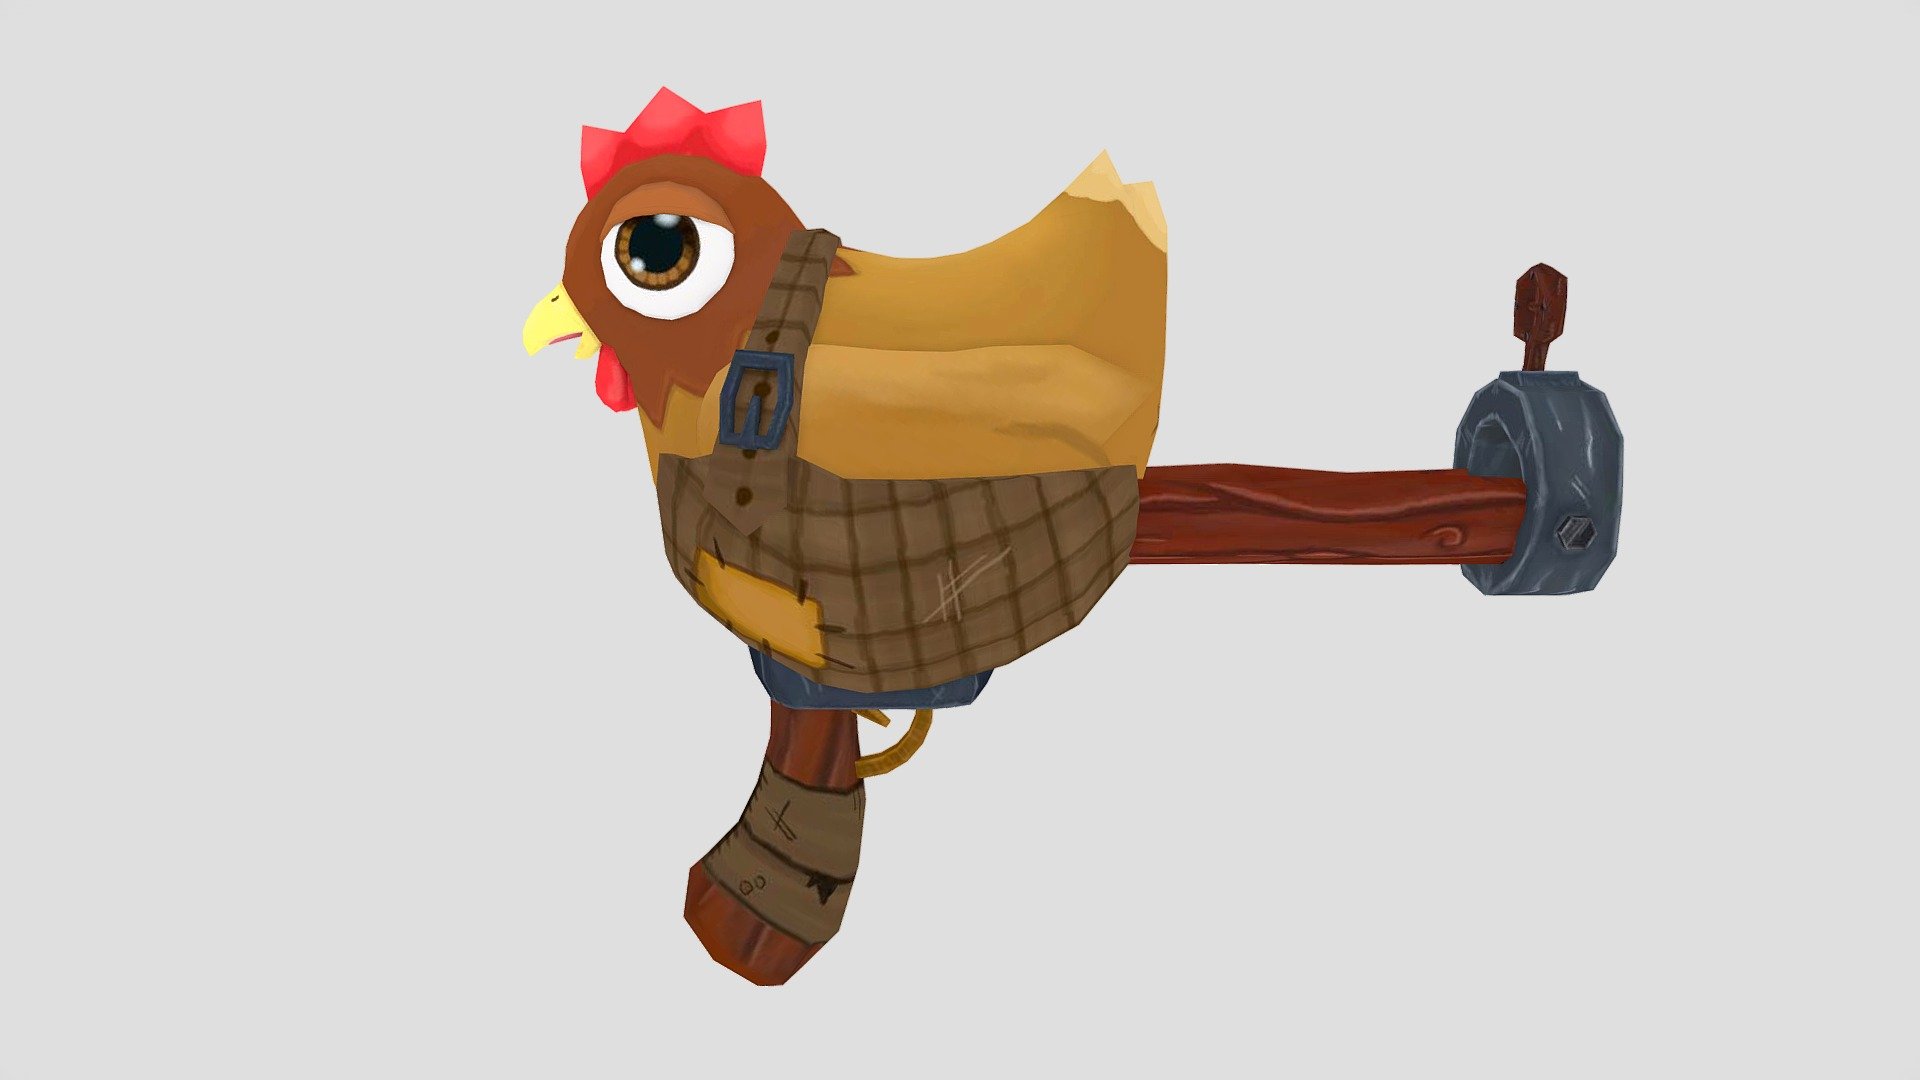 Model made for Easter War, a Online Shooter project from school.

Based in https://sketchfab.com/models/e9e17cb02bcb45a8b0ba632de1aac5f6

Test the game here!
https://drive.google.com/file/d/1WDfCP6bk6C8CAu7XzvY77__Z5CWrI_ox/view - Chicken Gun - 3D model by Meri L. (@azurehusky) 3d model